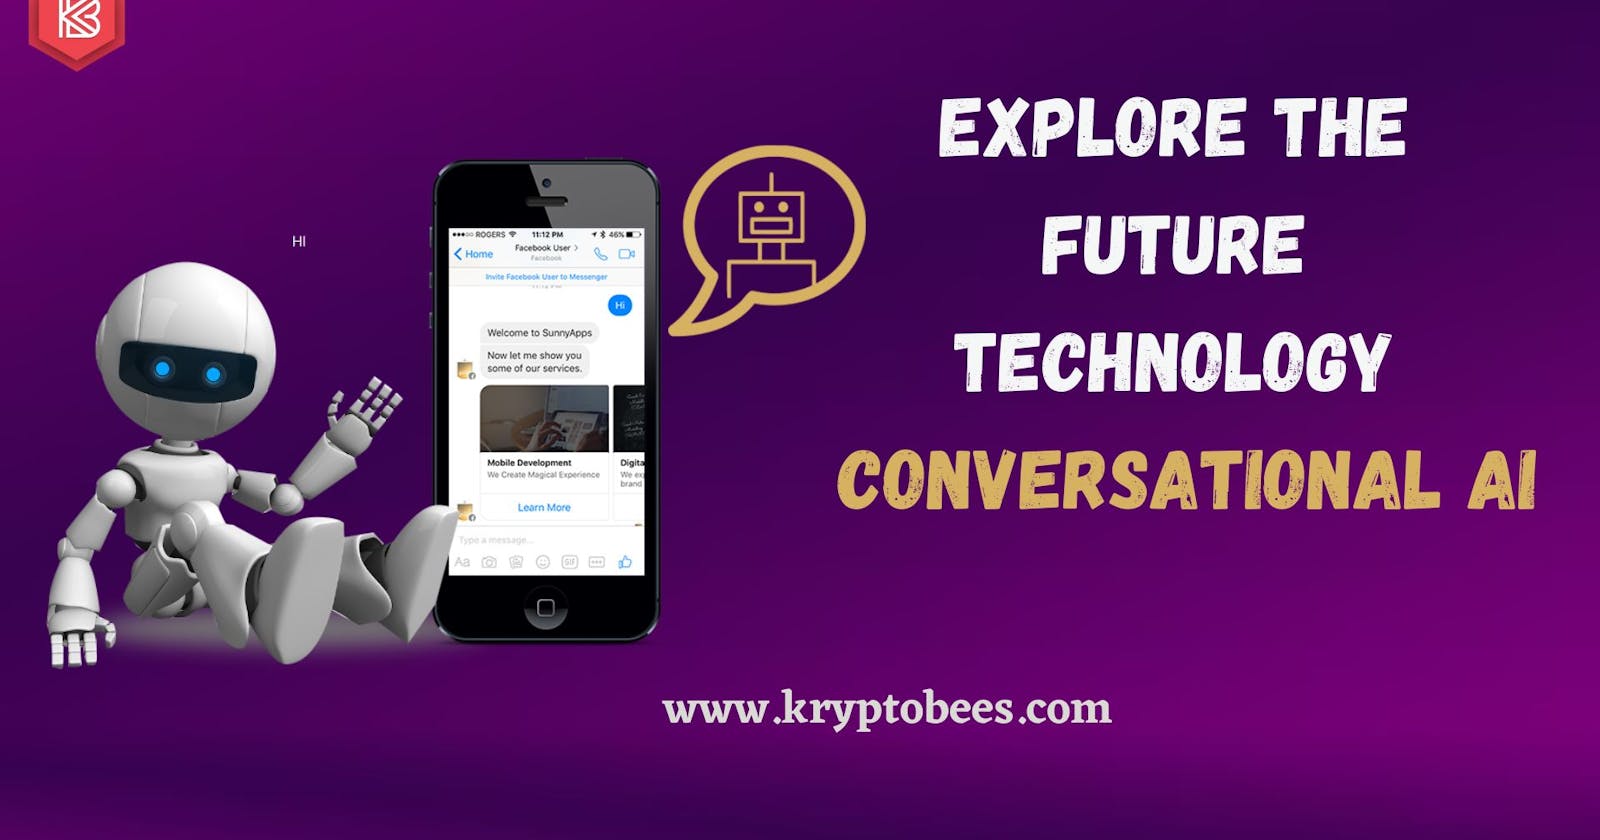 Explore the Future Technology - Conversational AI